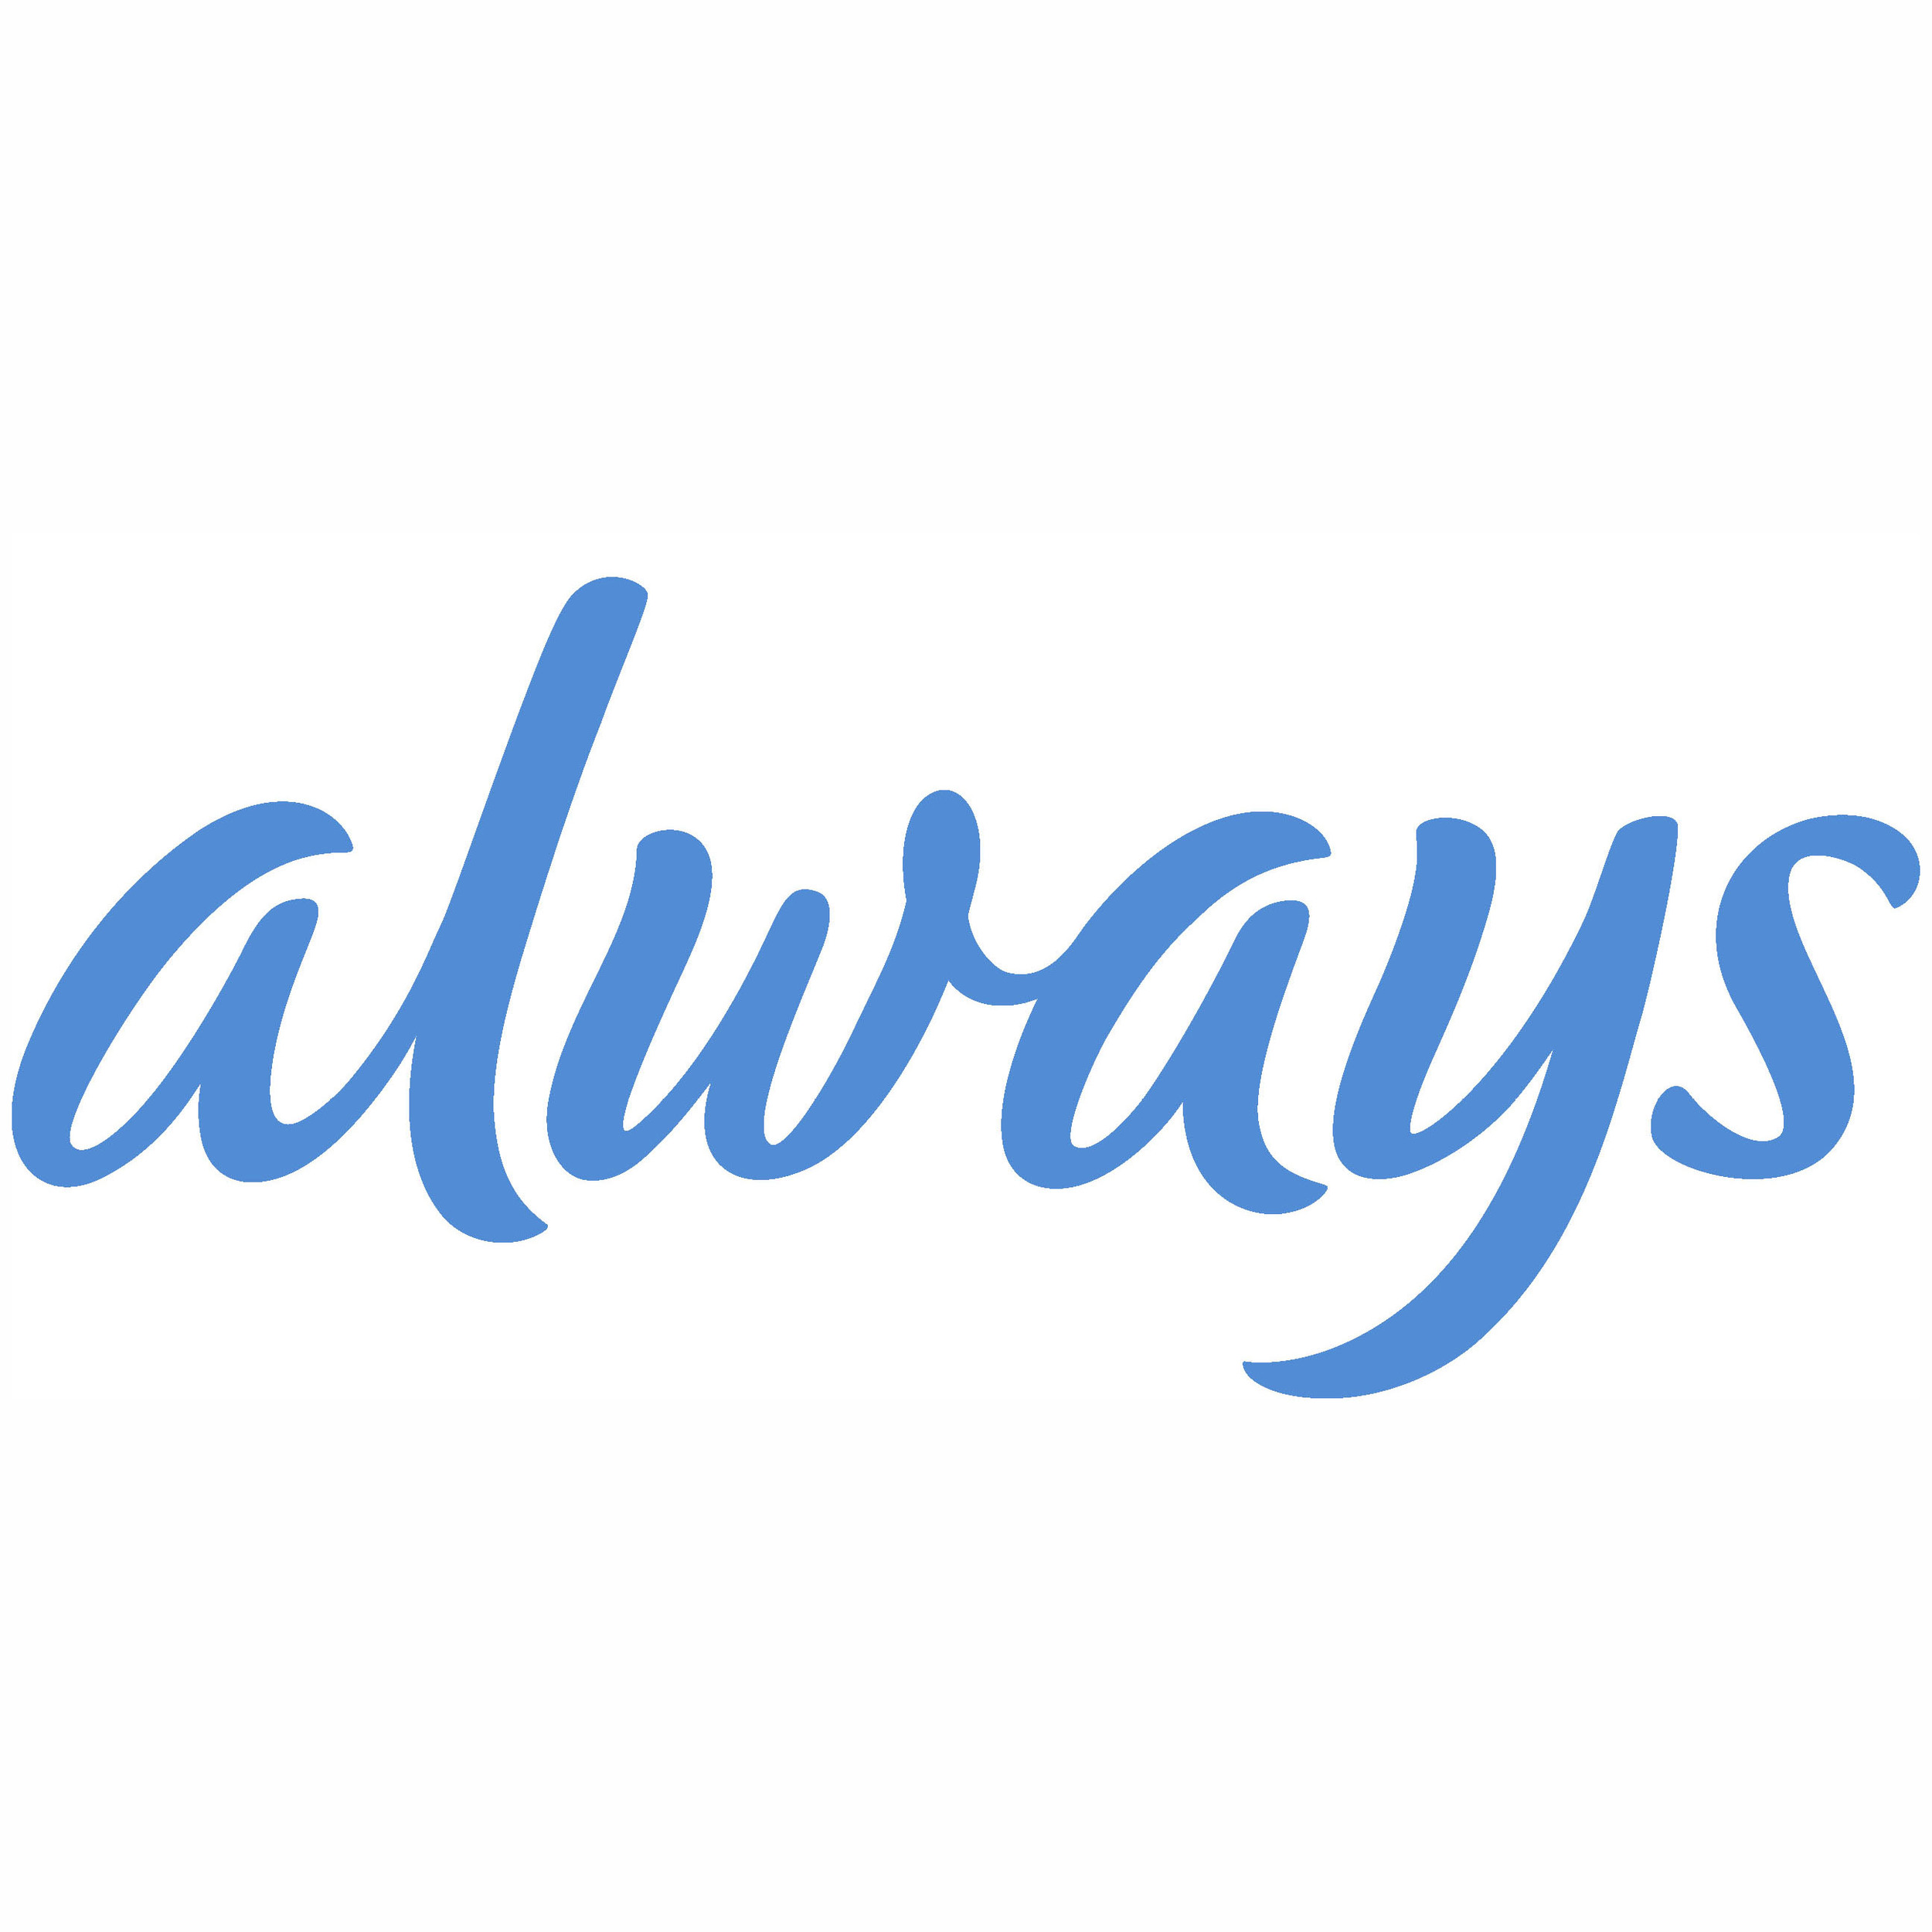 Always_Infinity_logo.jpg